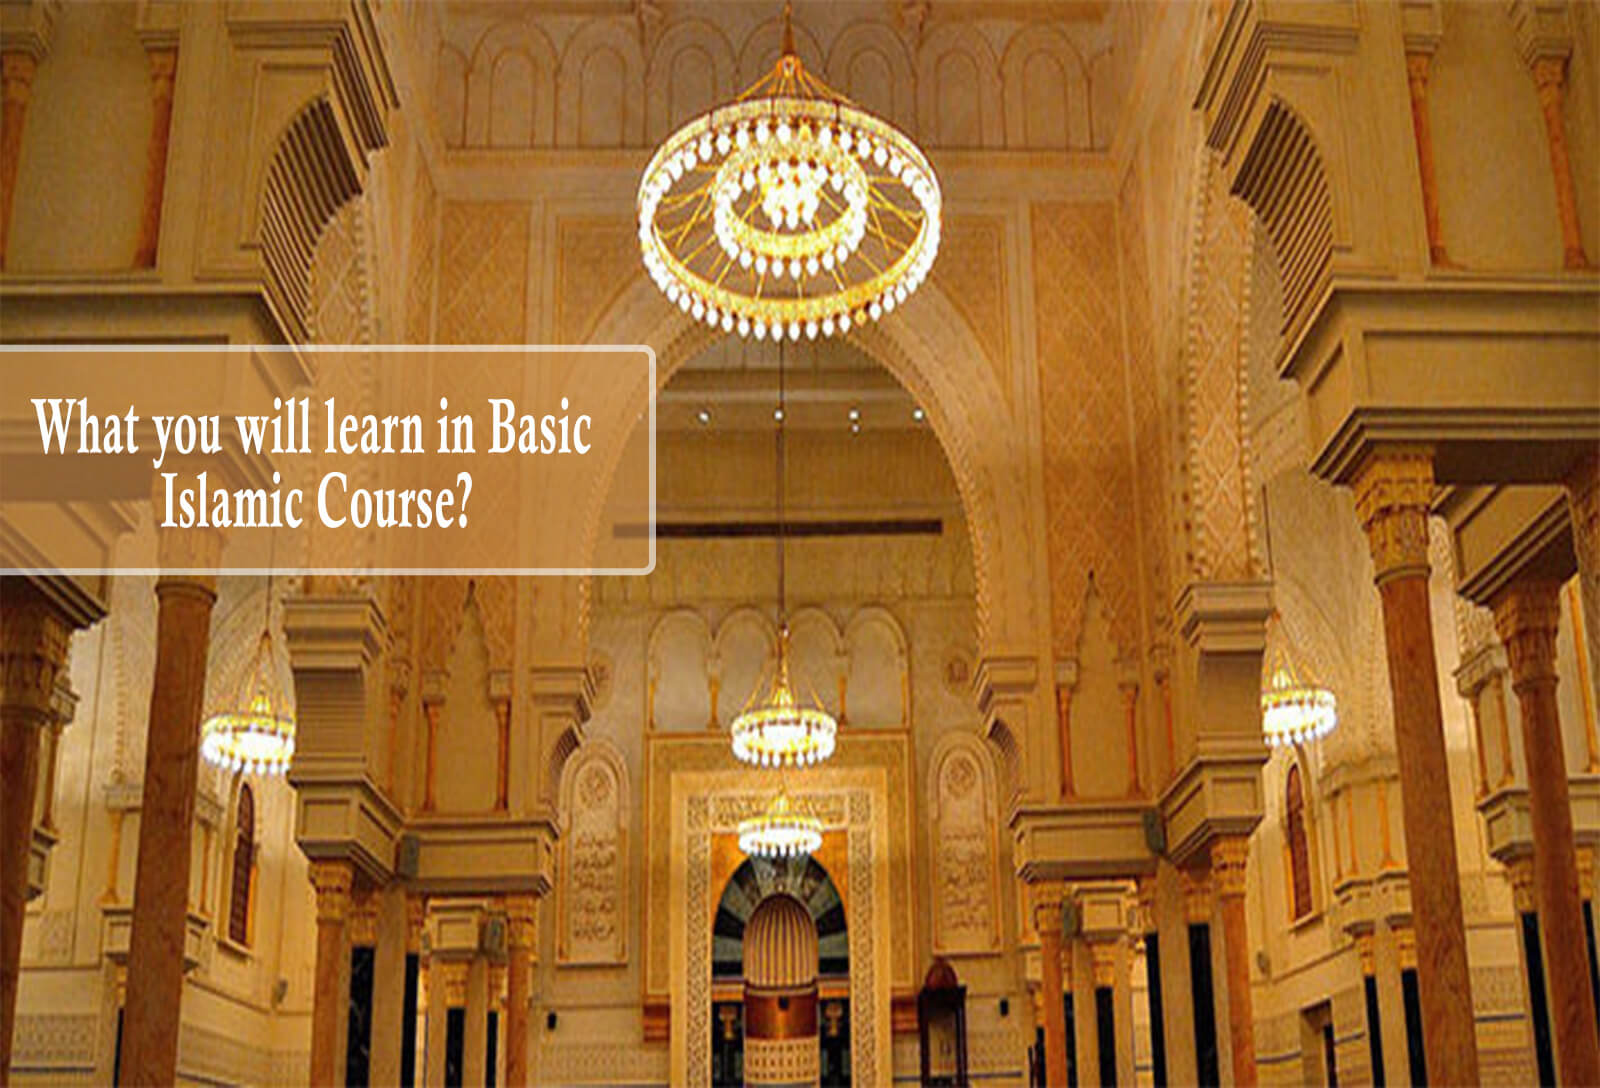 Basic Islamic Course